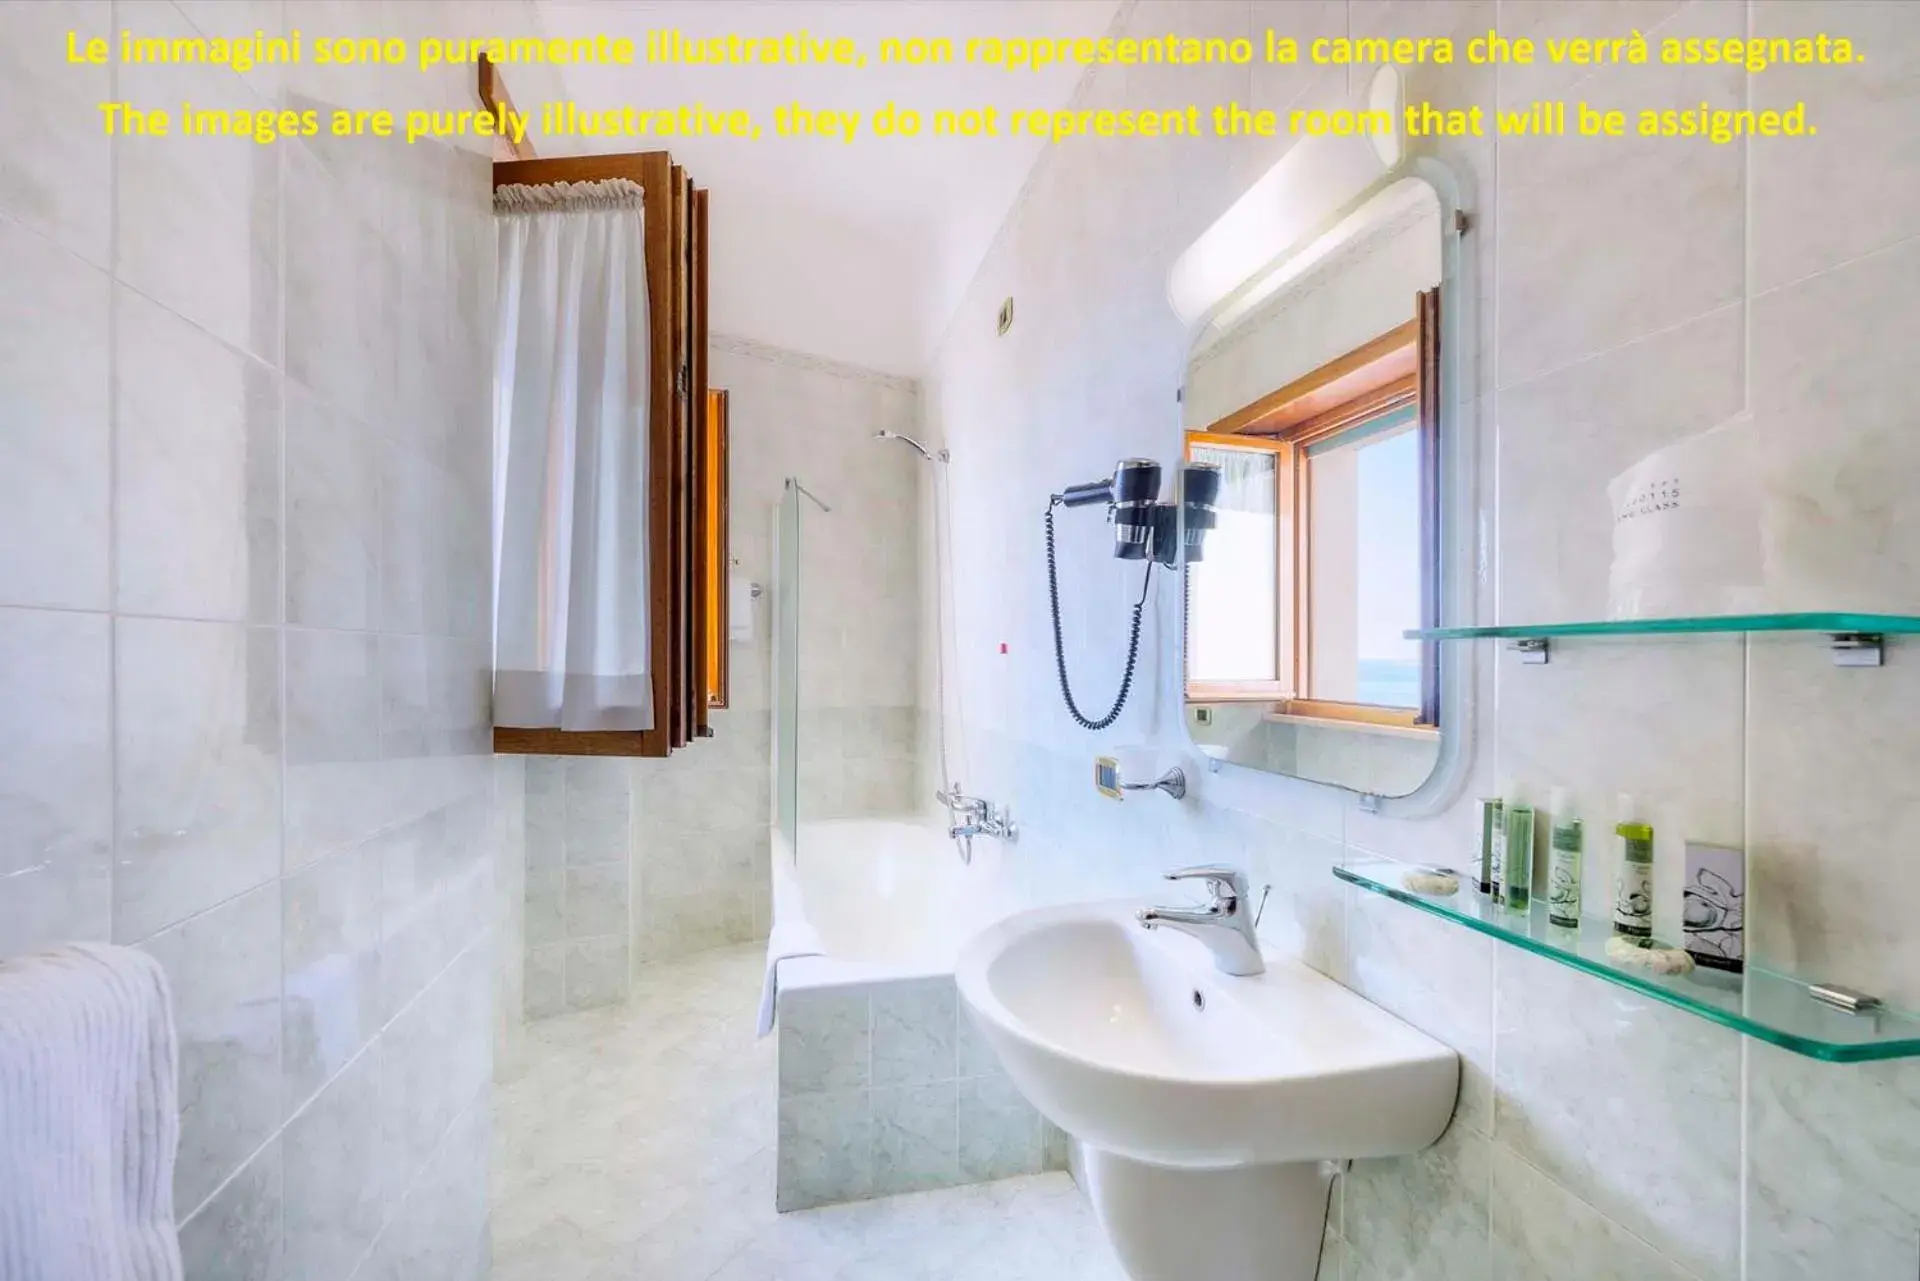 Bathroom in Astura Palace Hotel